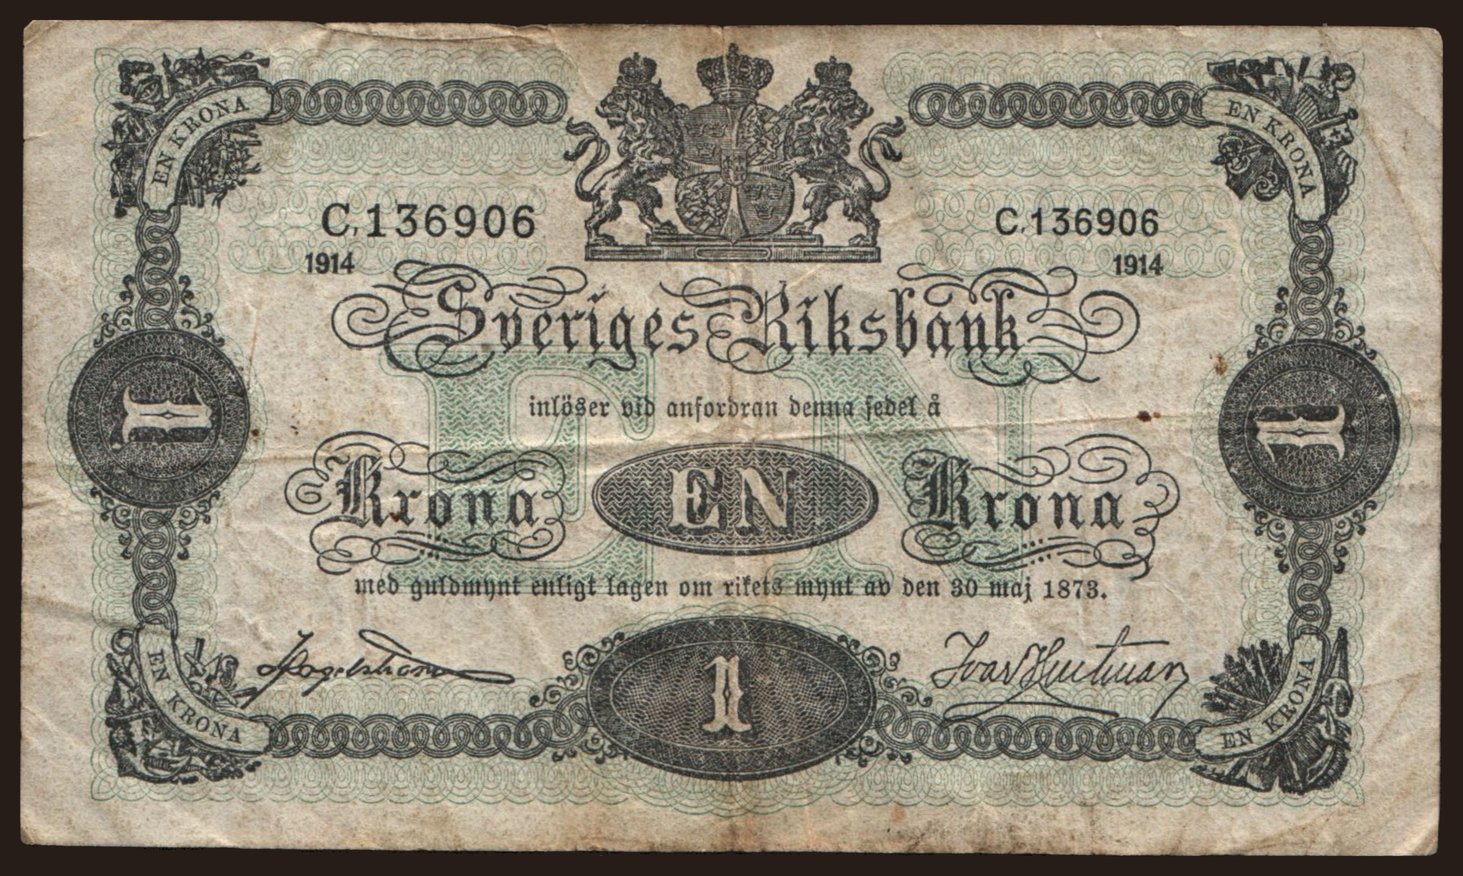 1 krona, 1914